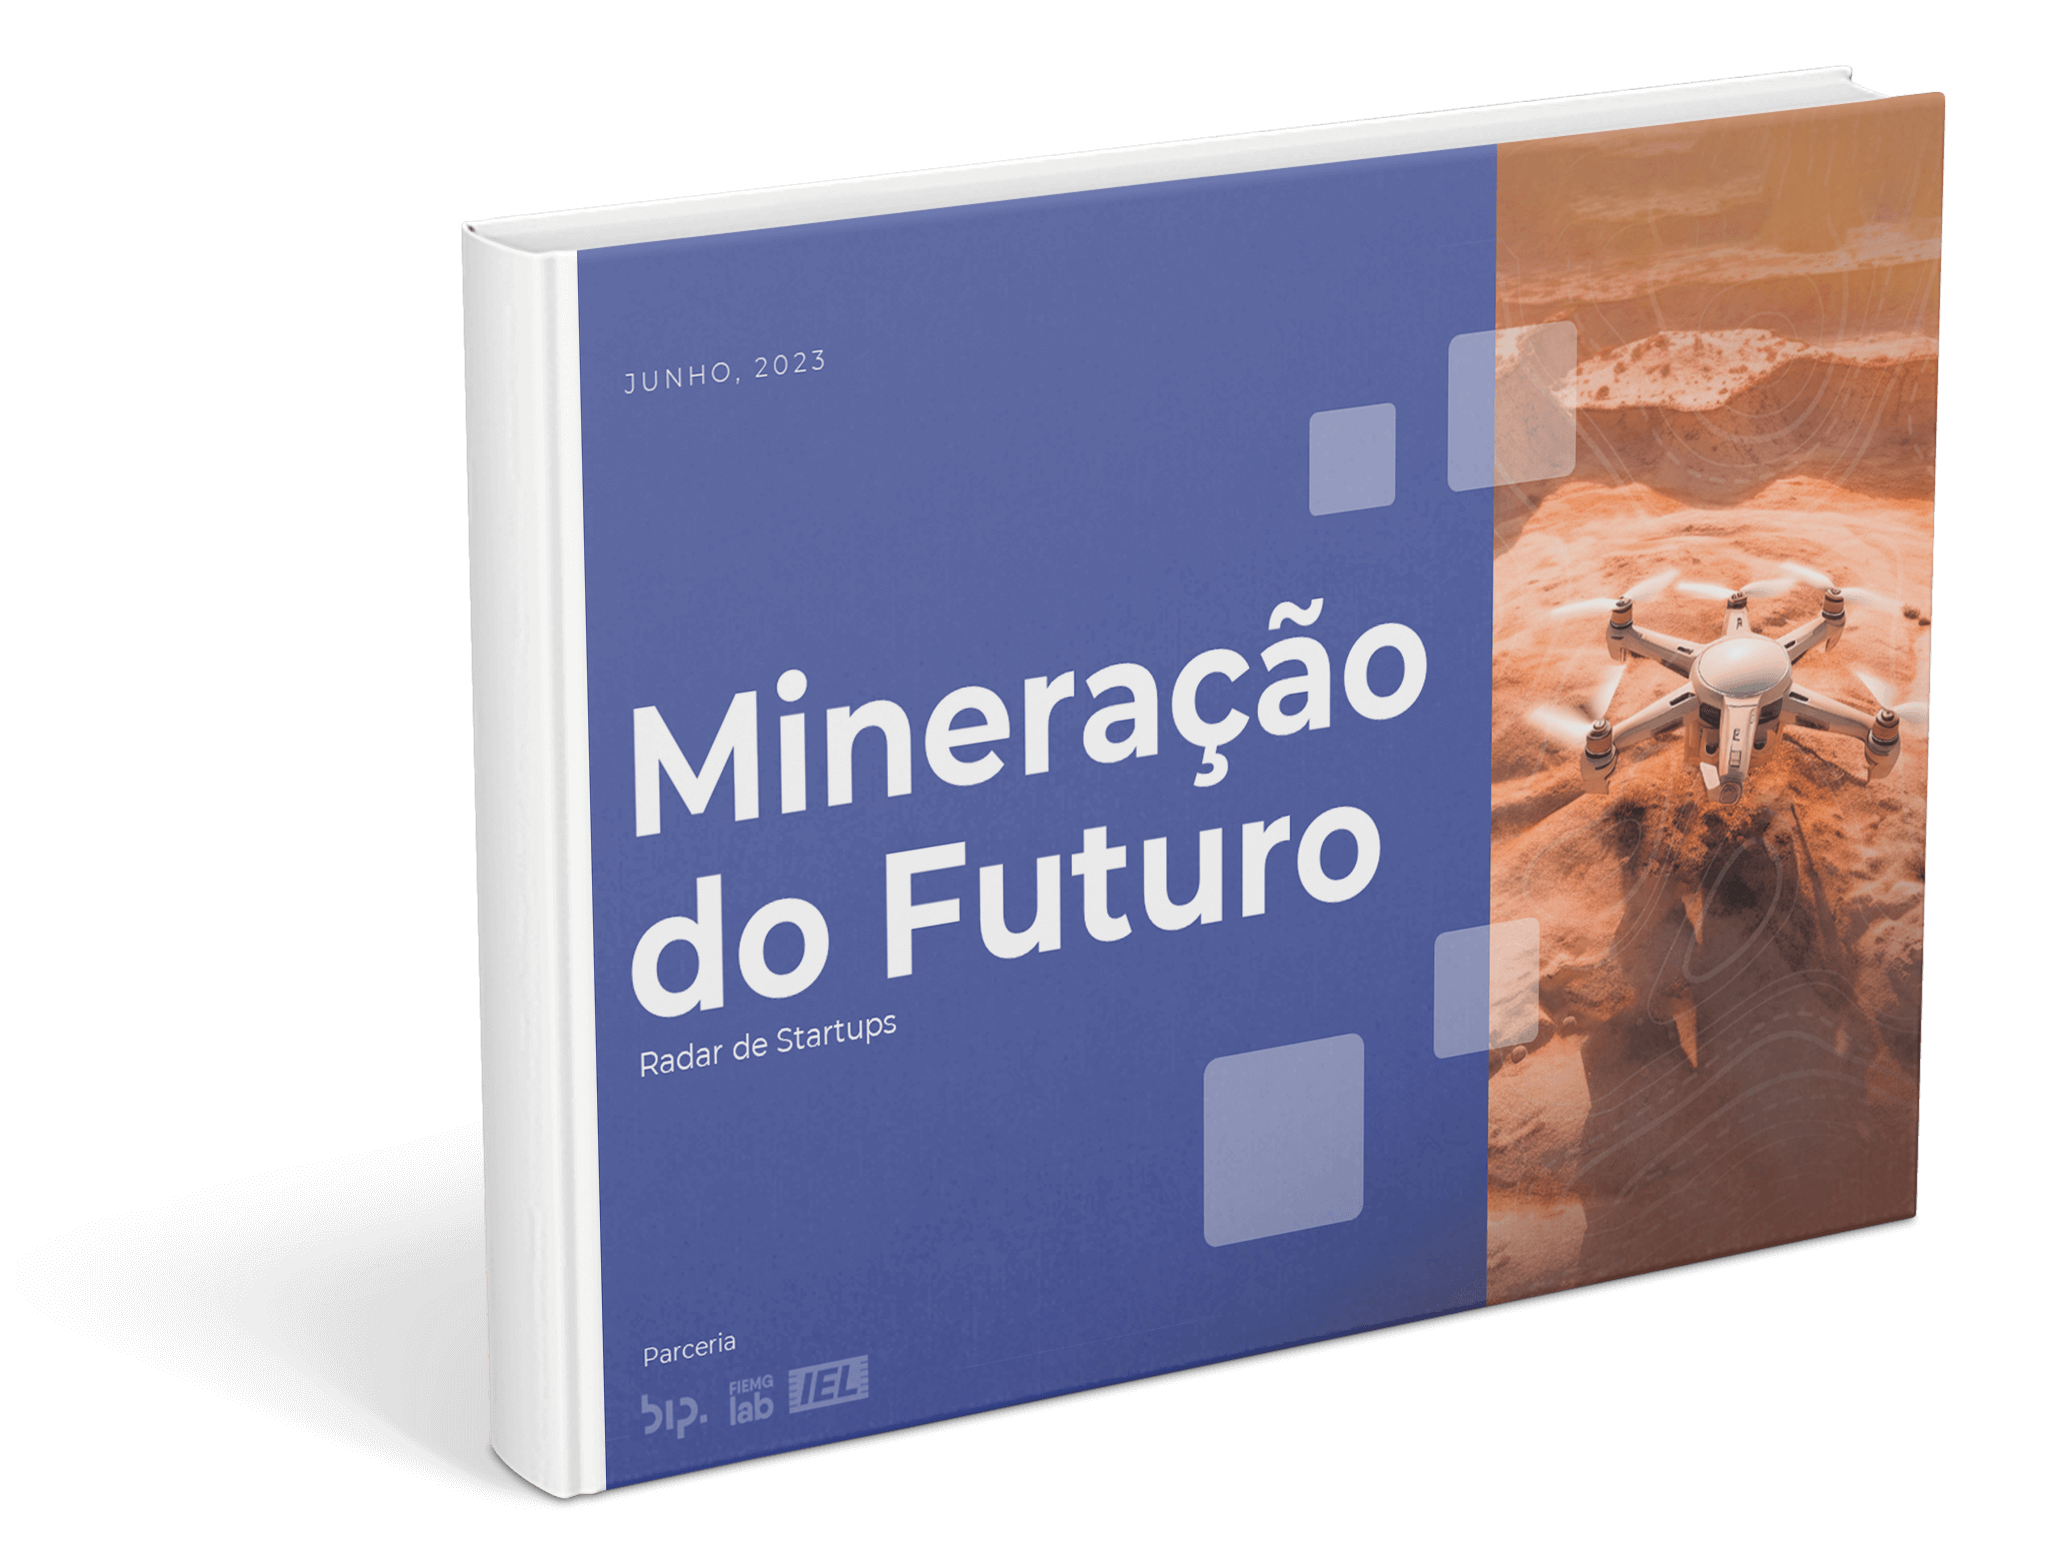 mineracao-d-futuro-radar-de-startups-fiemg-lab-e-bip-brasil-consultoria